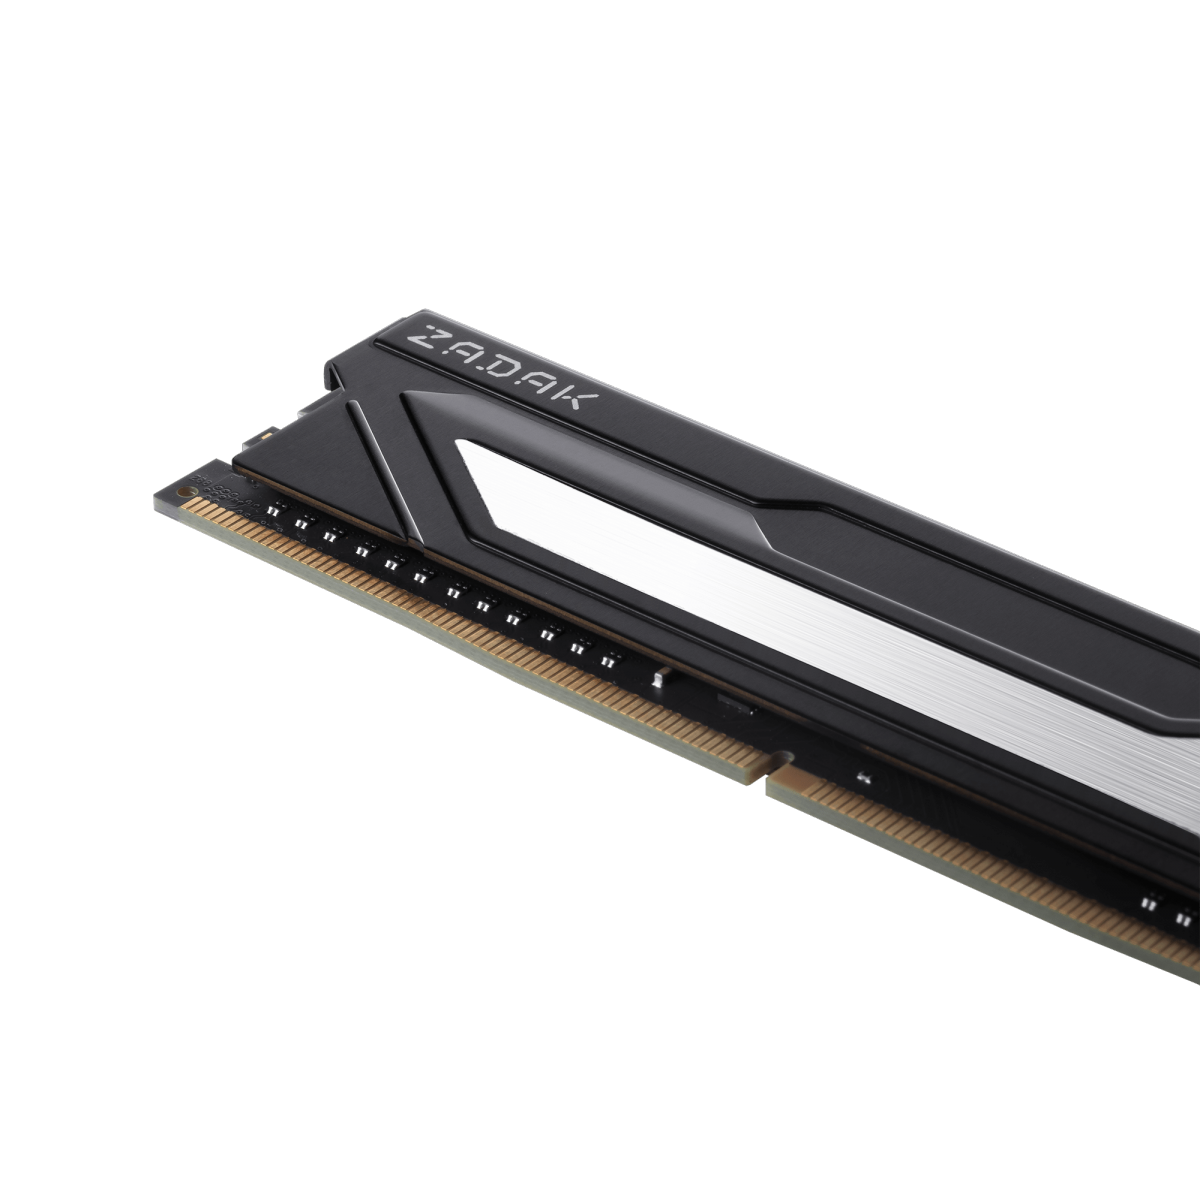 Memória DDR4 Zadak Twist, Black, 8GB, 3000MHz, ZD4-TWS30C08-08GYB1